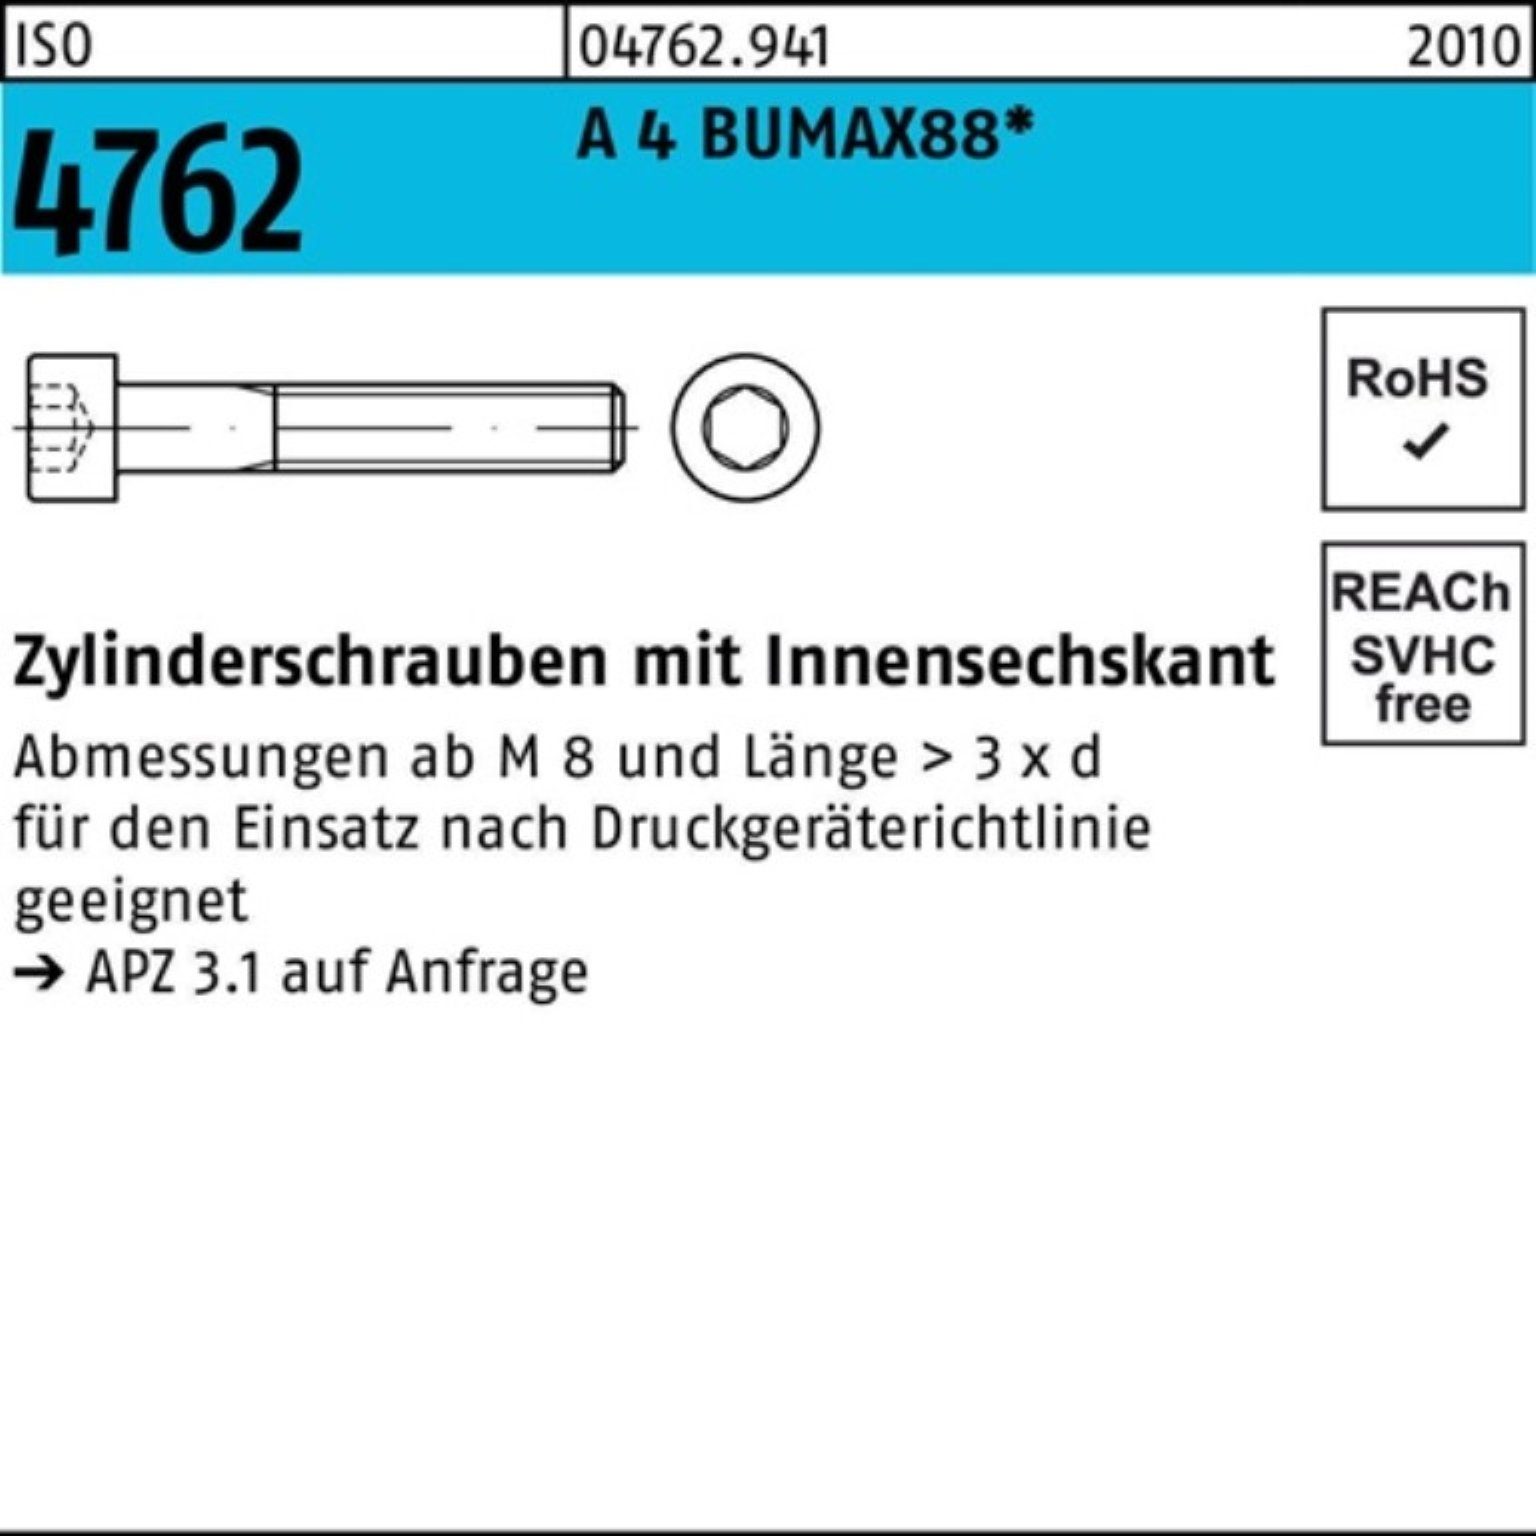 Bufab Zylinderschraube 100er Pack Zylinderschraube ISO 4762 Innen-6kt M20x 60 A 4 BUMAX88 10